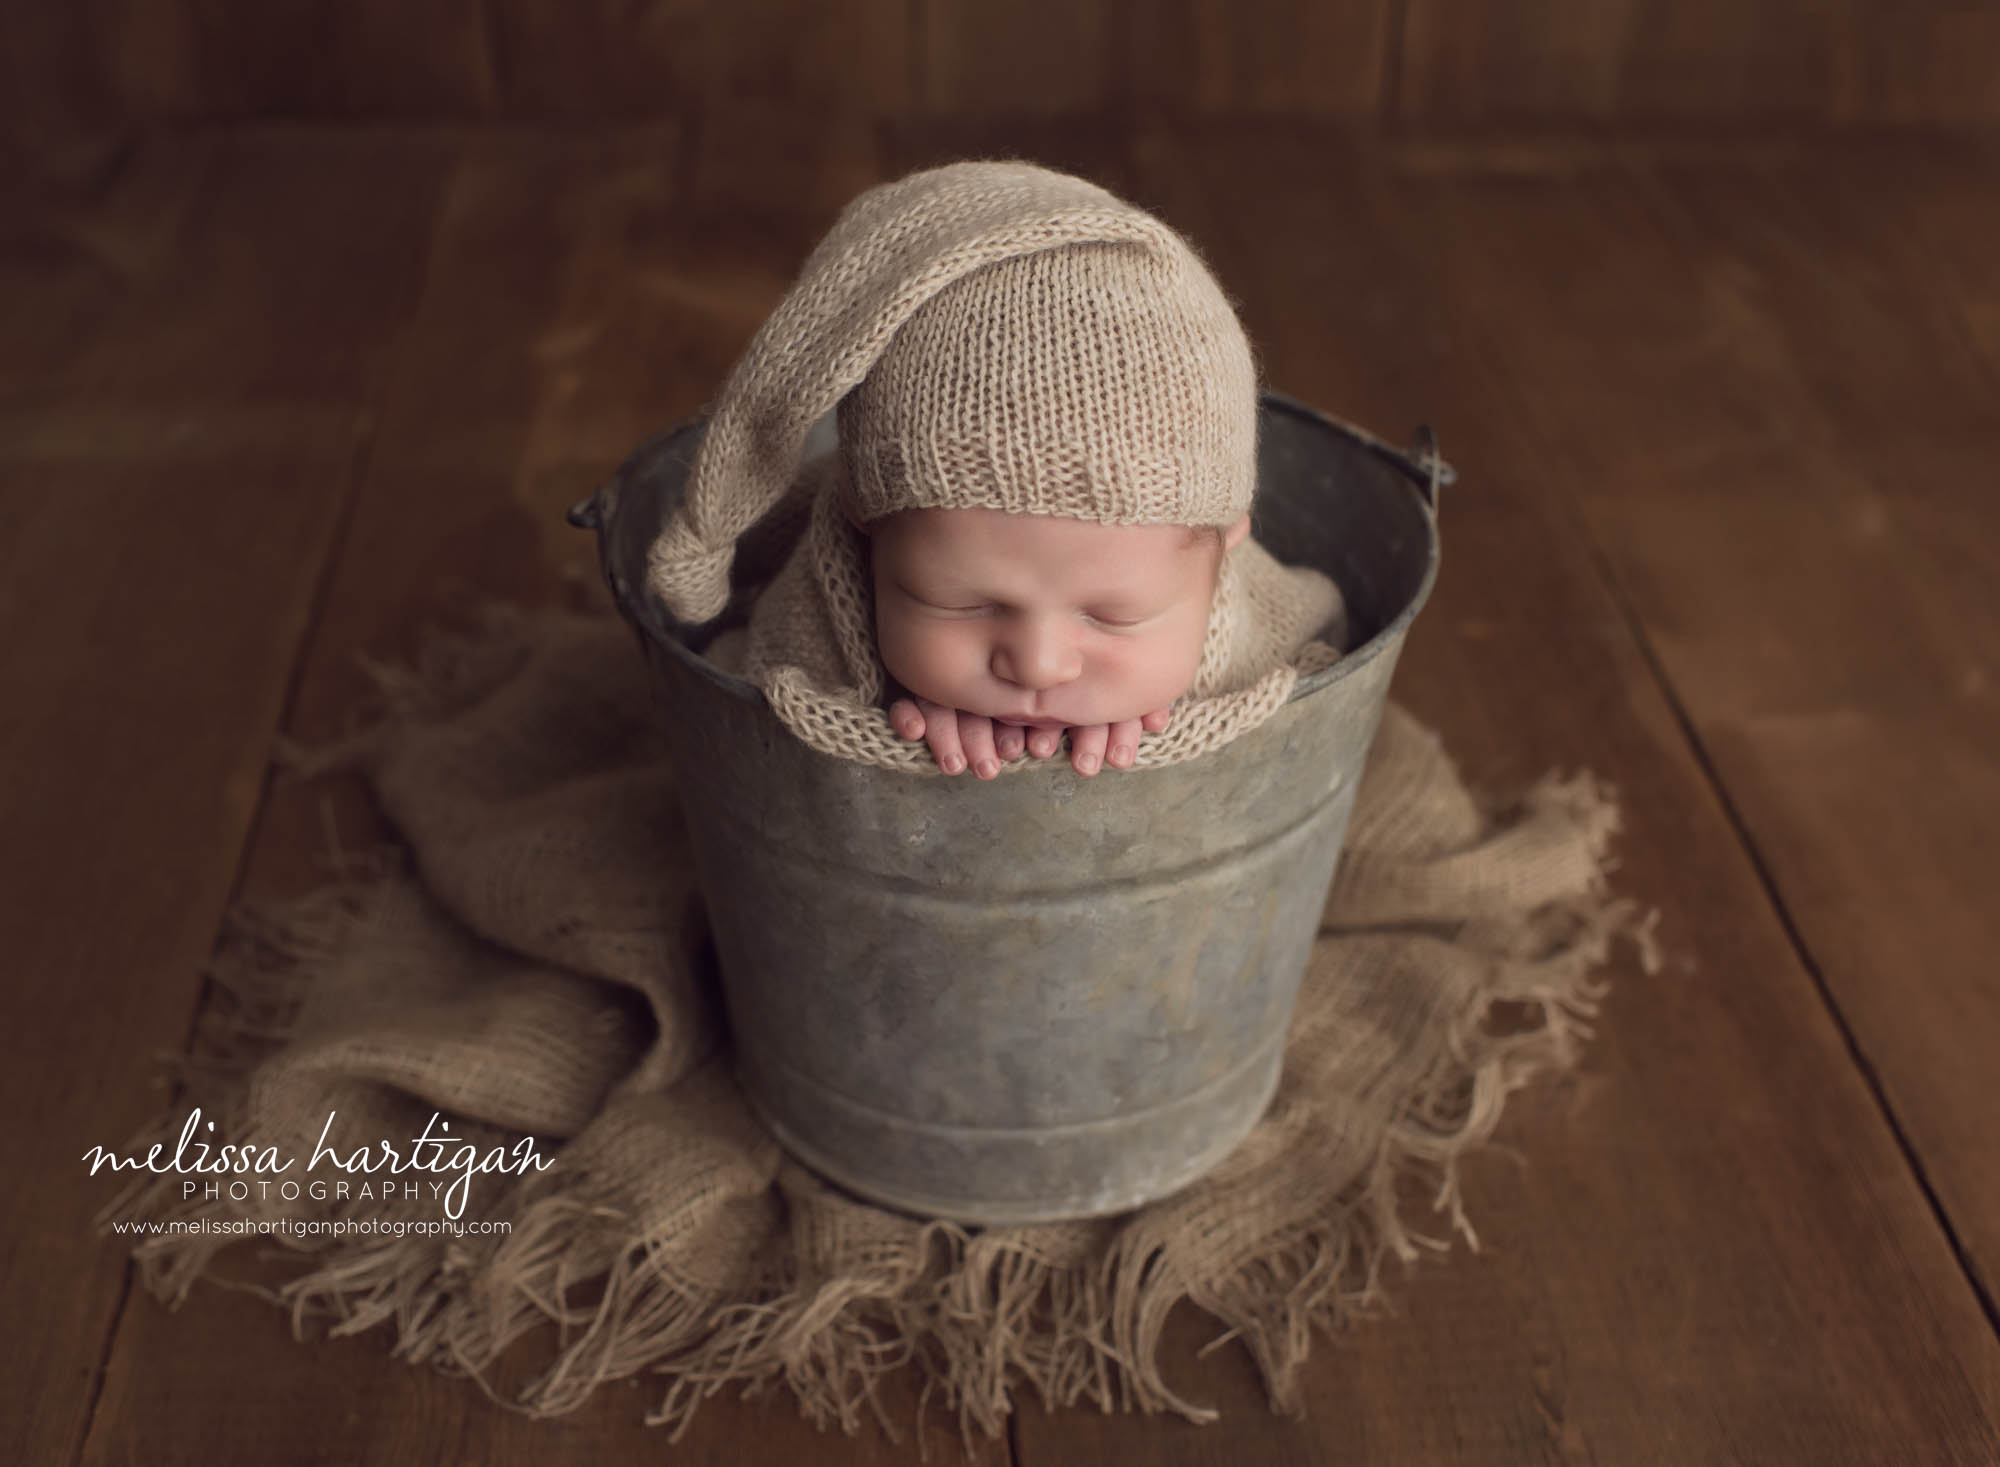 Melissa Hartigan Photography Newborn Photographer Connecticut baby boy wearing knit hat sleeping in metal bucket